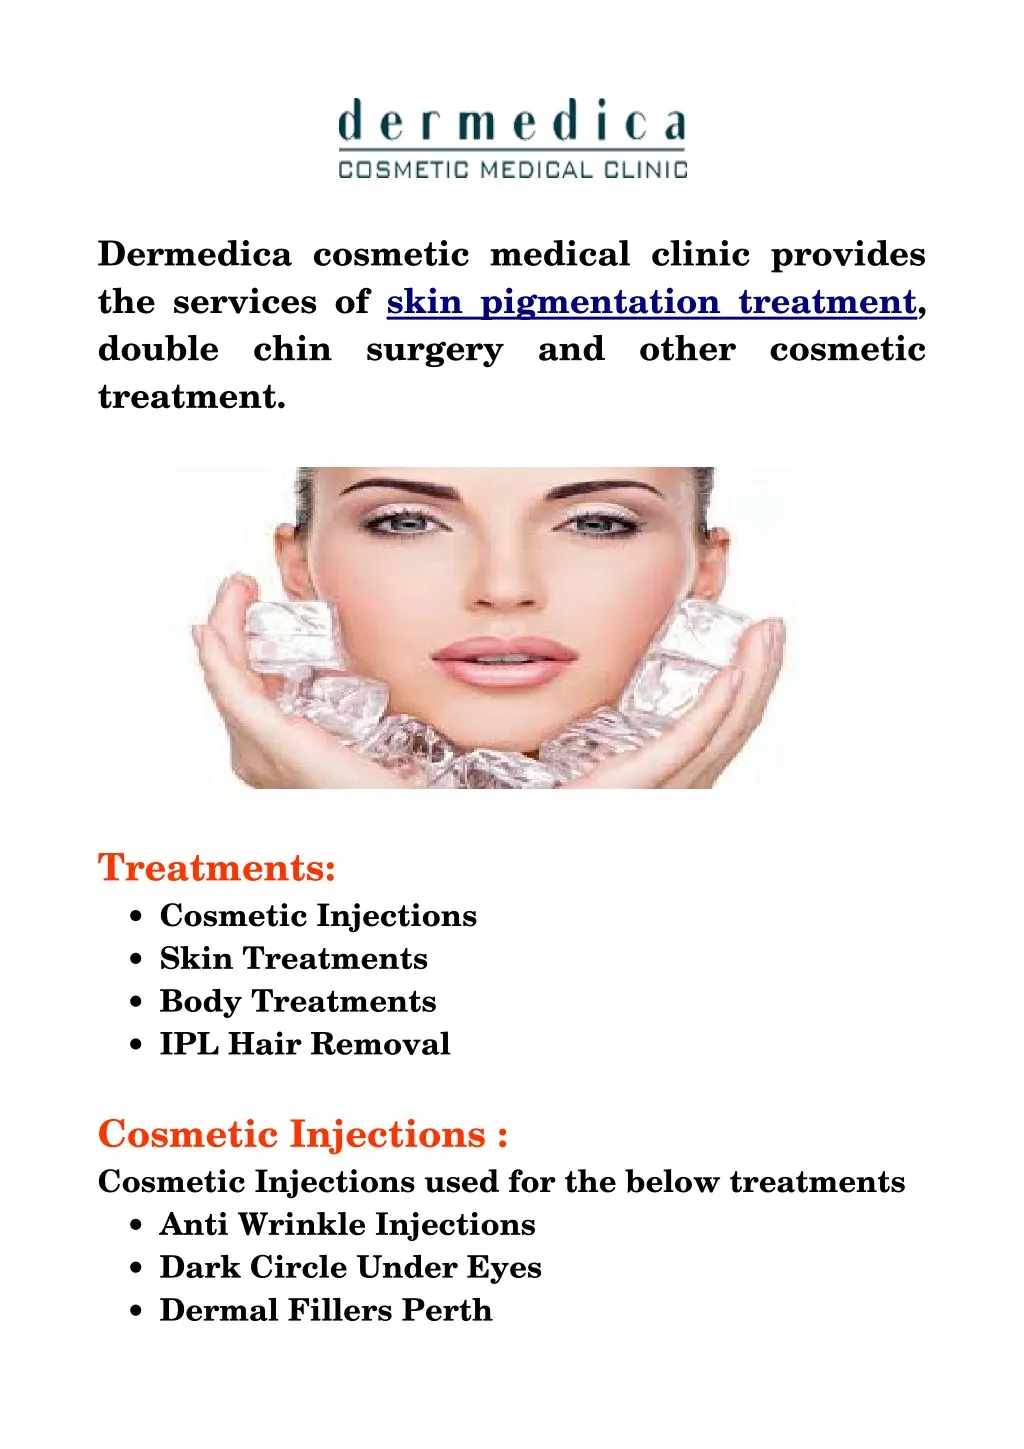 dermedica cosmetic medical clinic provides